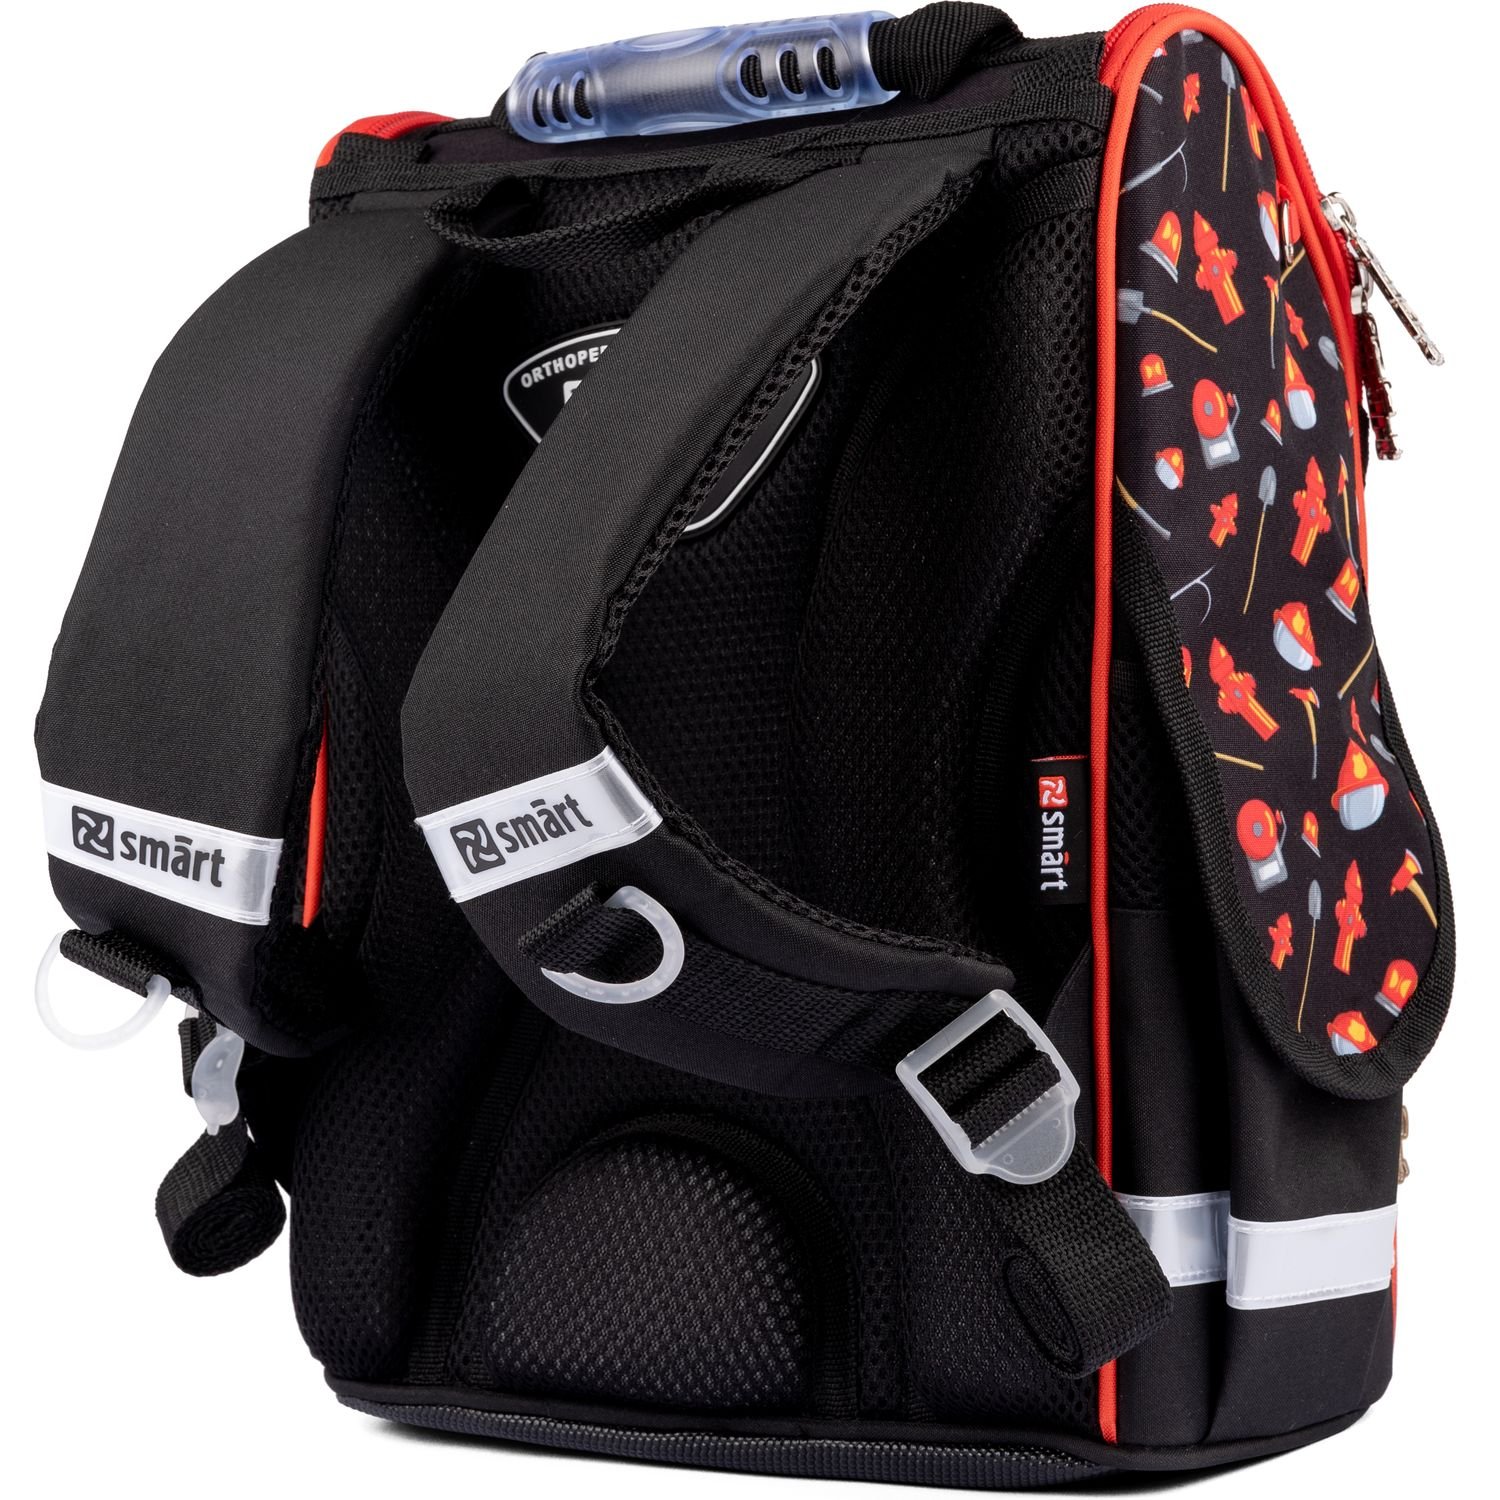 Рюкзак шкільний каркасний Smart PG-11 Fireman, черный с красным (559015) - фото 4